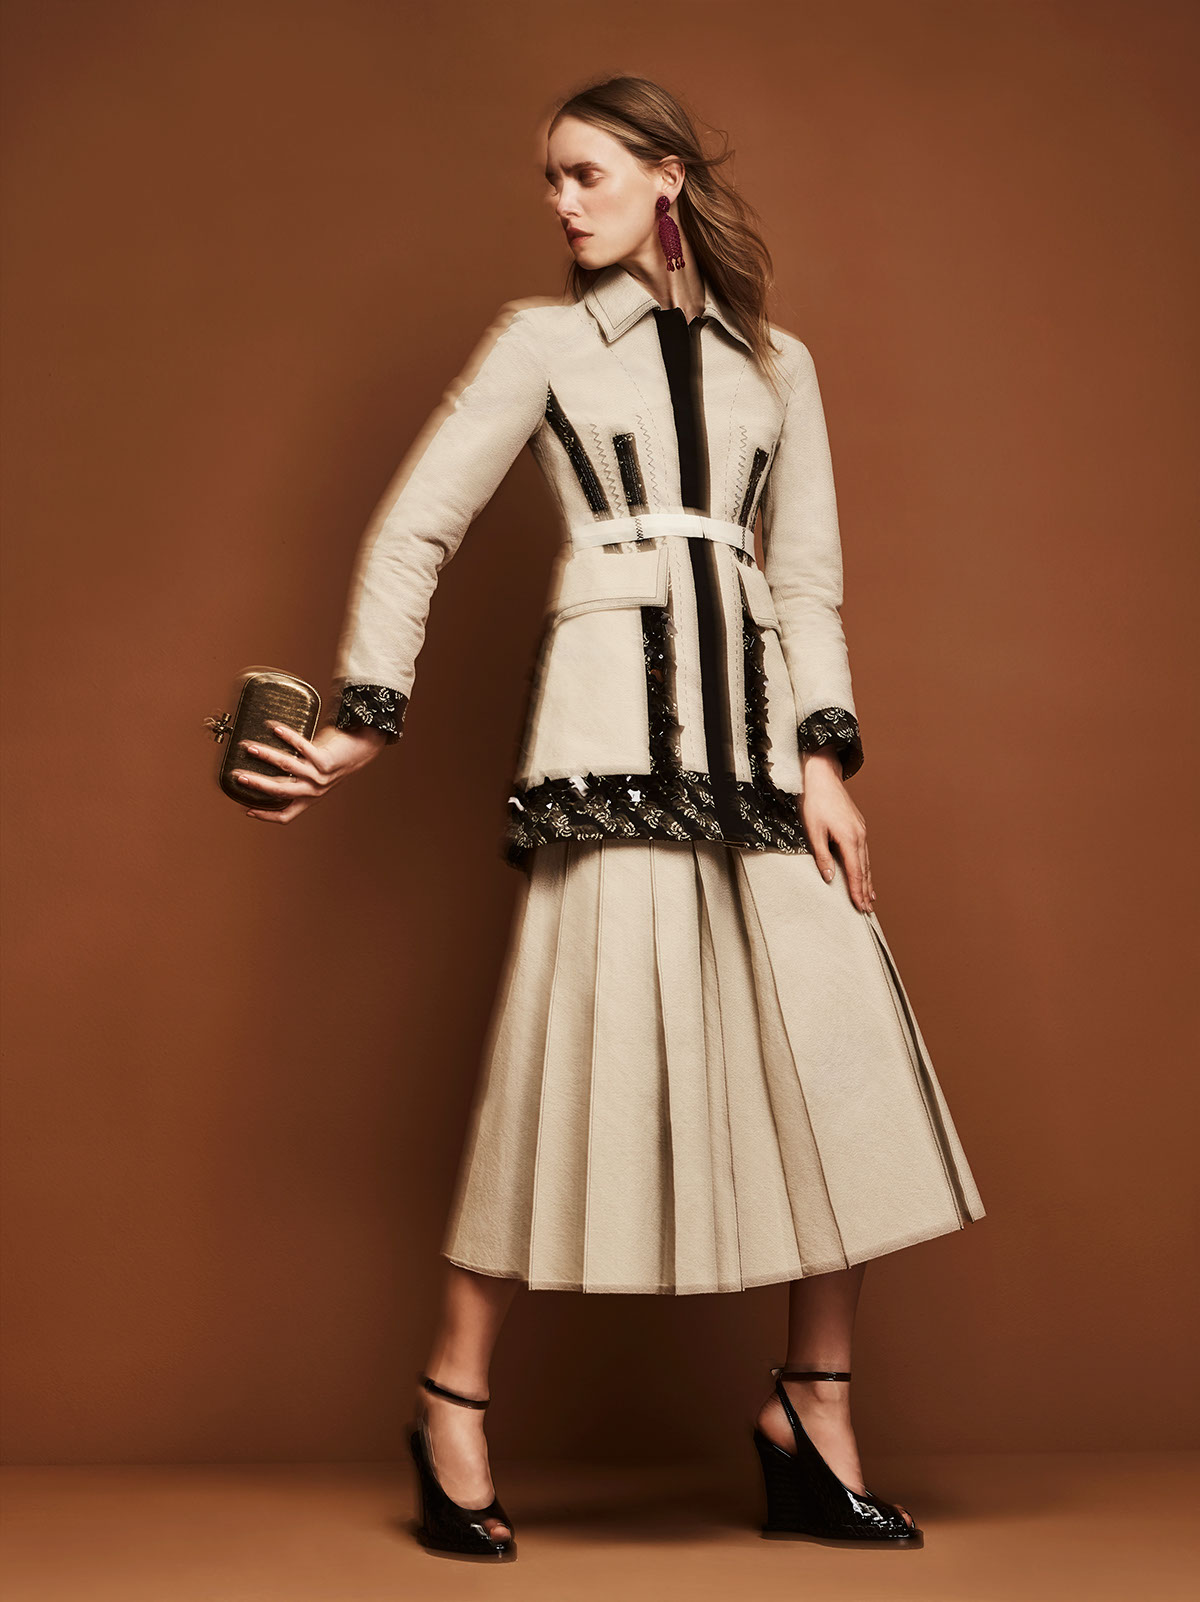 benjo arwas Elle Magazine elle mexico fashion editorial khaki high fashion art Elle super model studio fashion